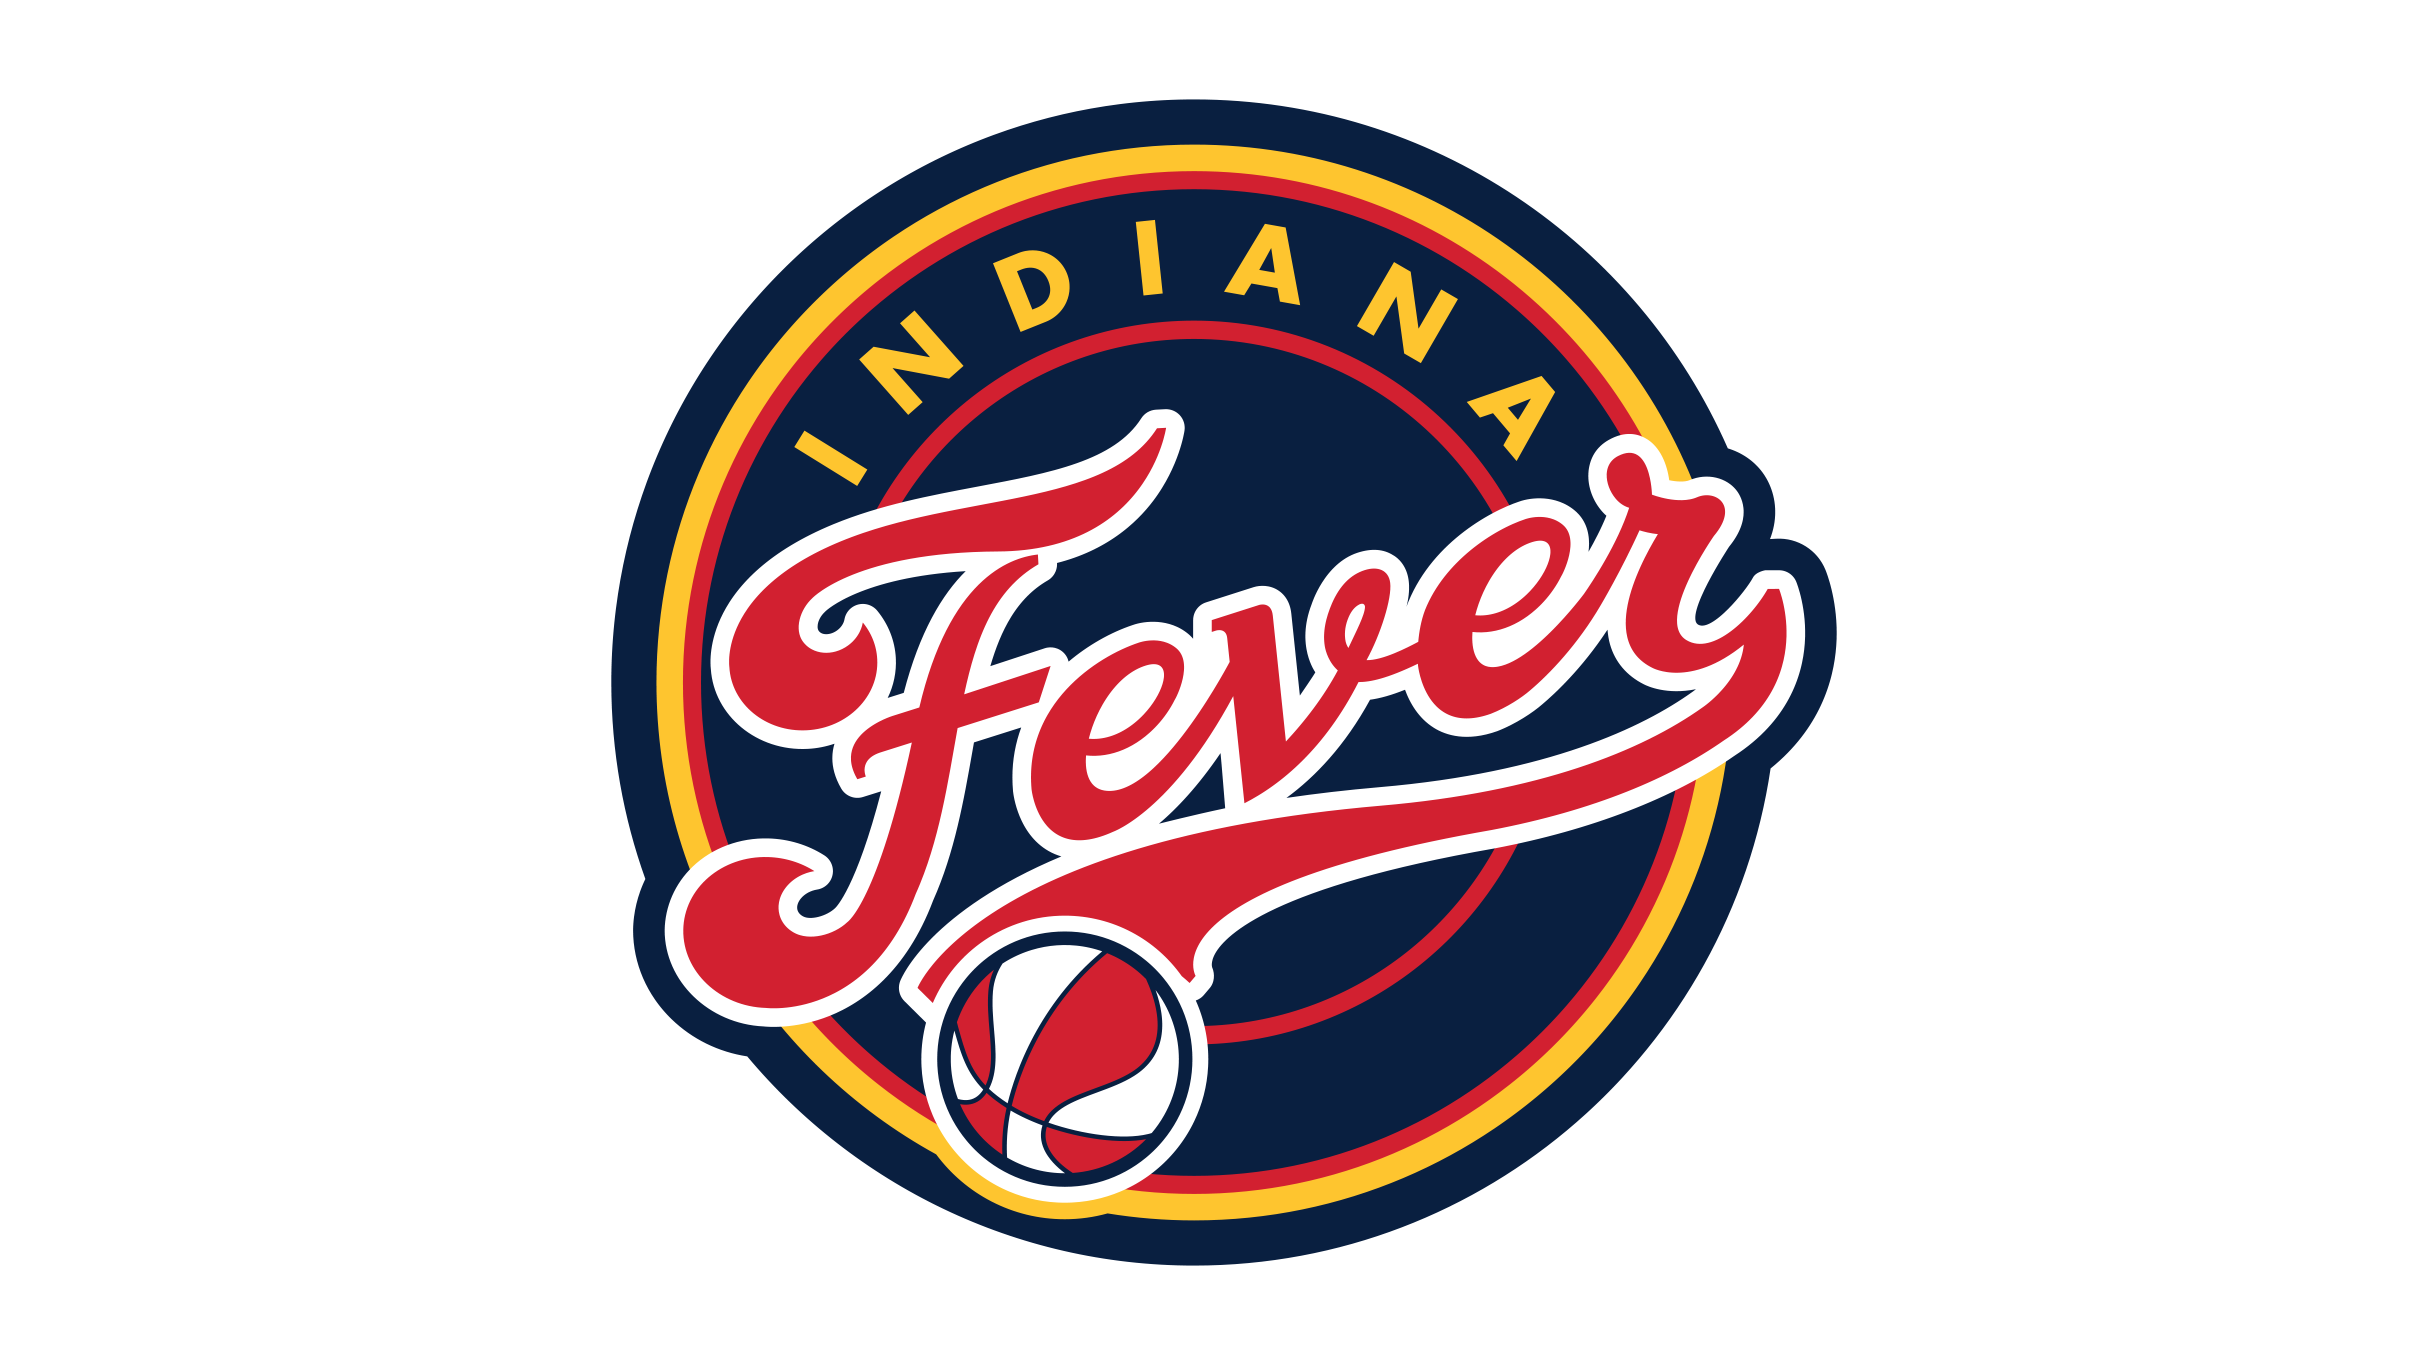 Indiana Fever vs. Connecticut Sun presales in Indianapolis